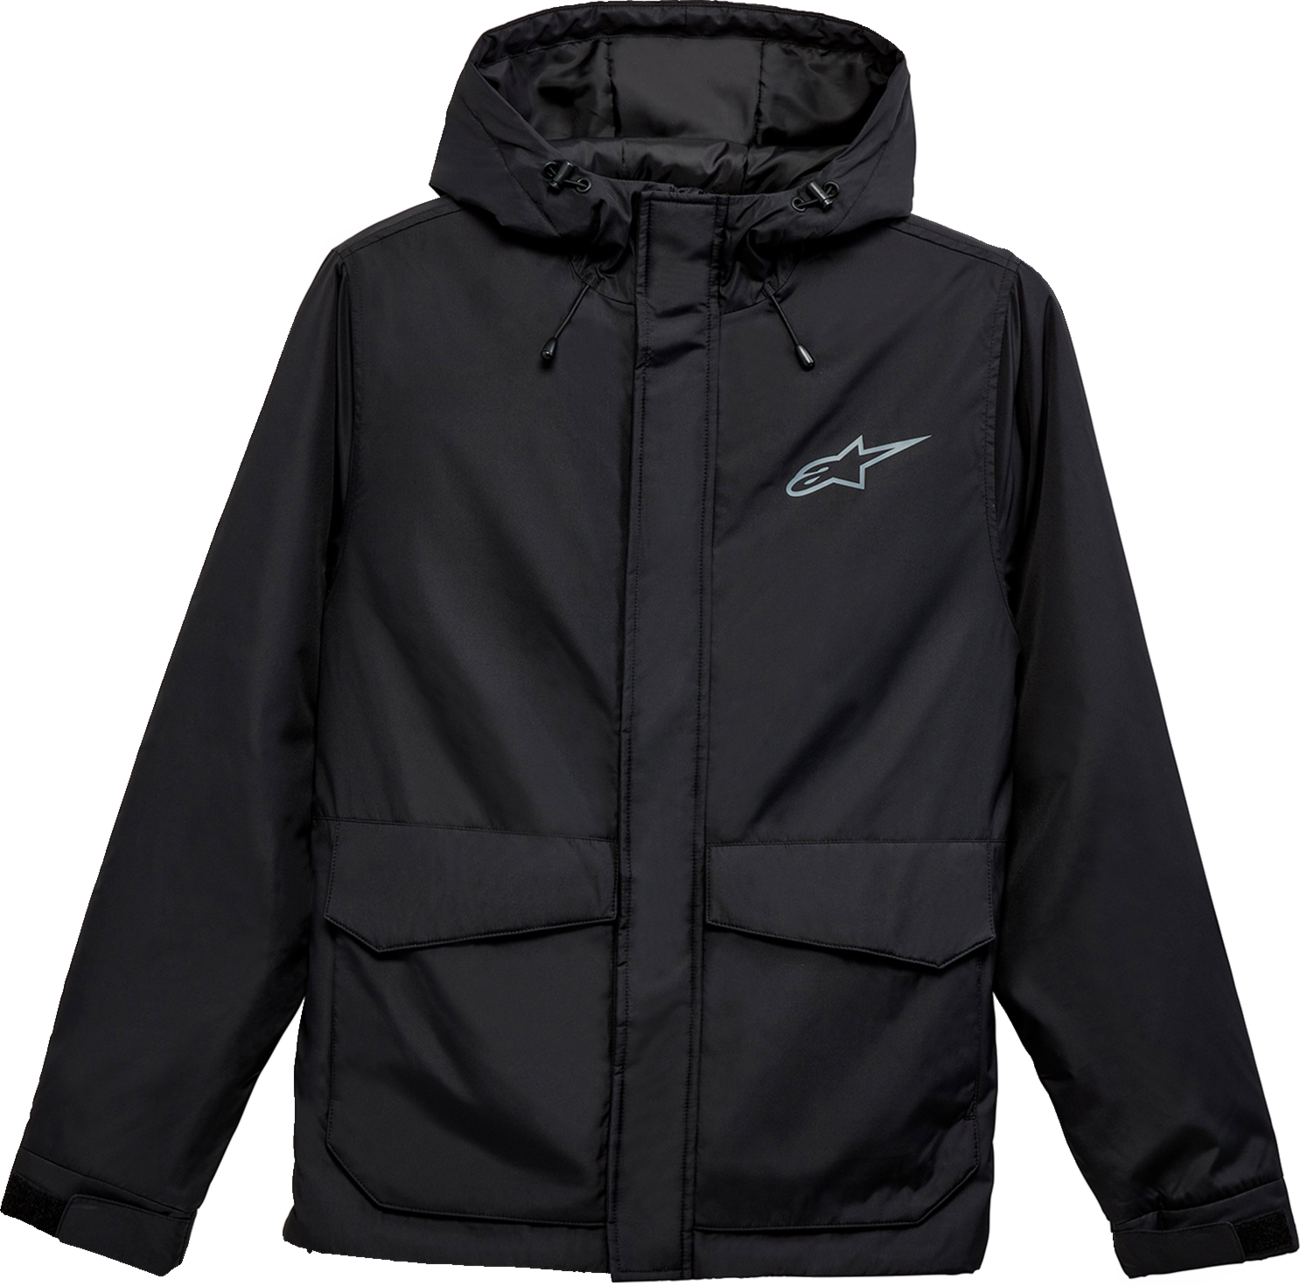 ALPINESTARS Fahrenheit Winter Jacket - Black - Large 1232-11100-10-L